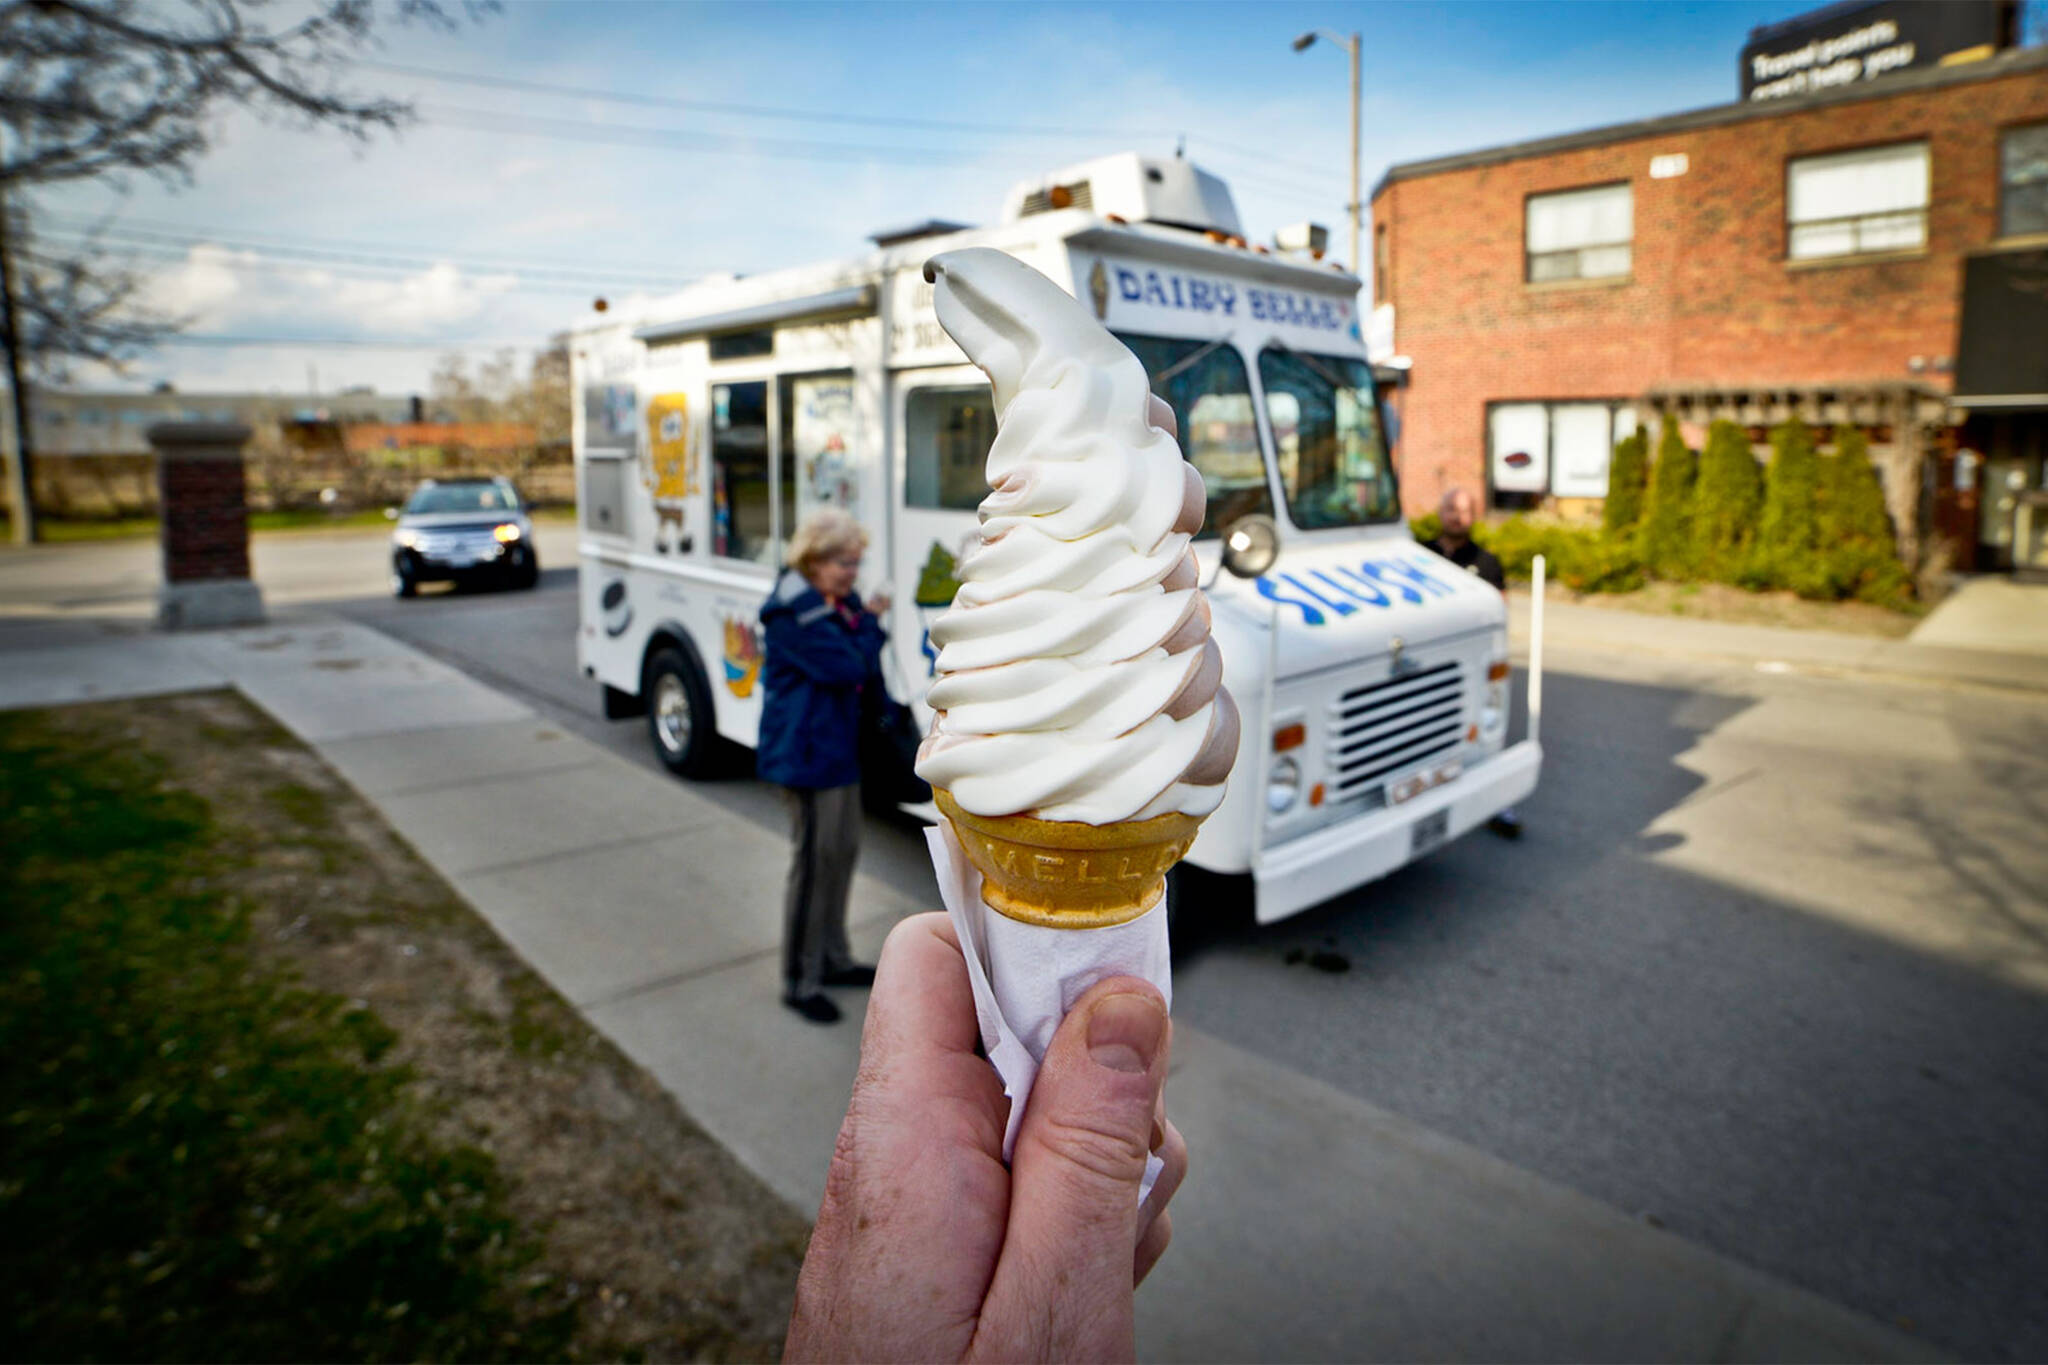 ice cream truck toronto